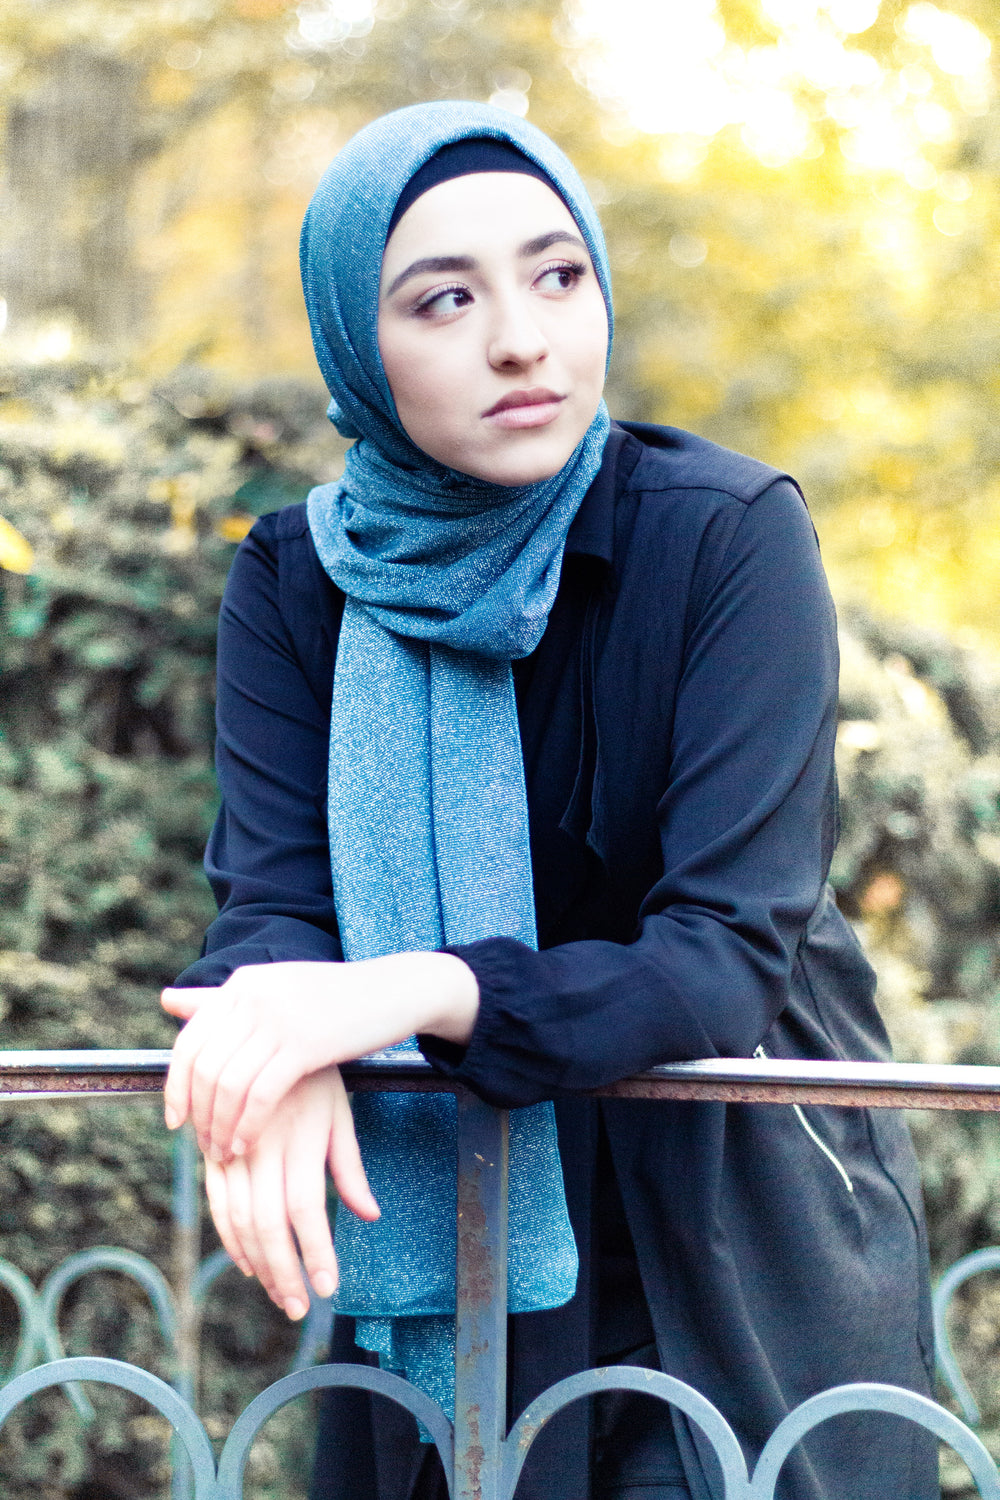 Shimmer Jersey Hijab - Gold